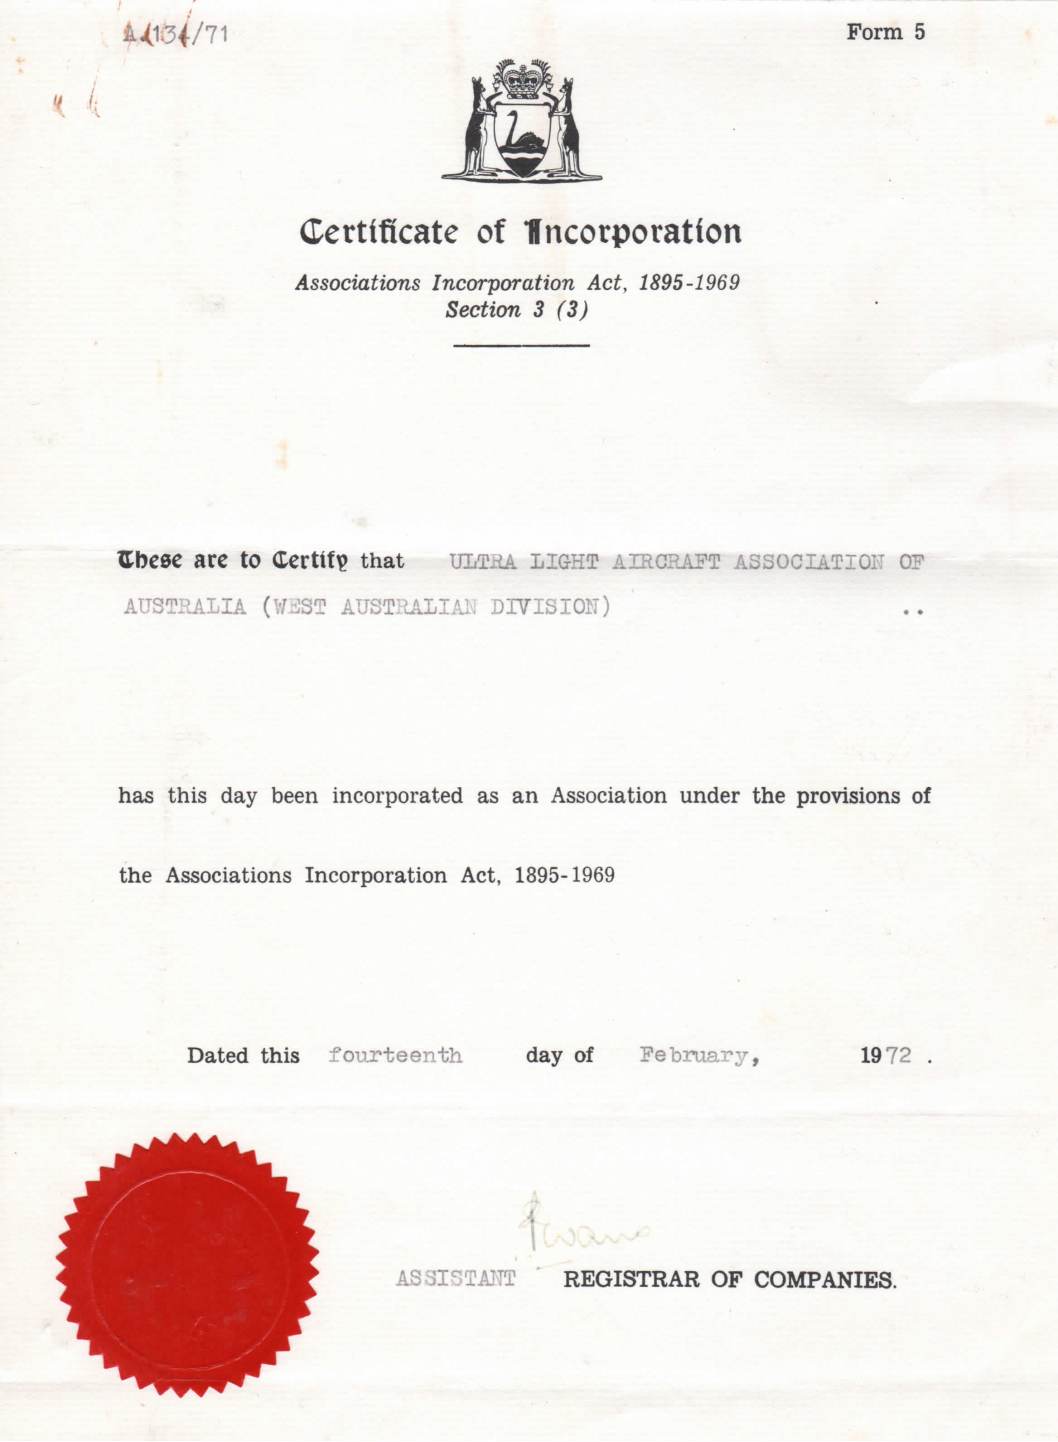 1972 cert of incorporation